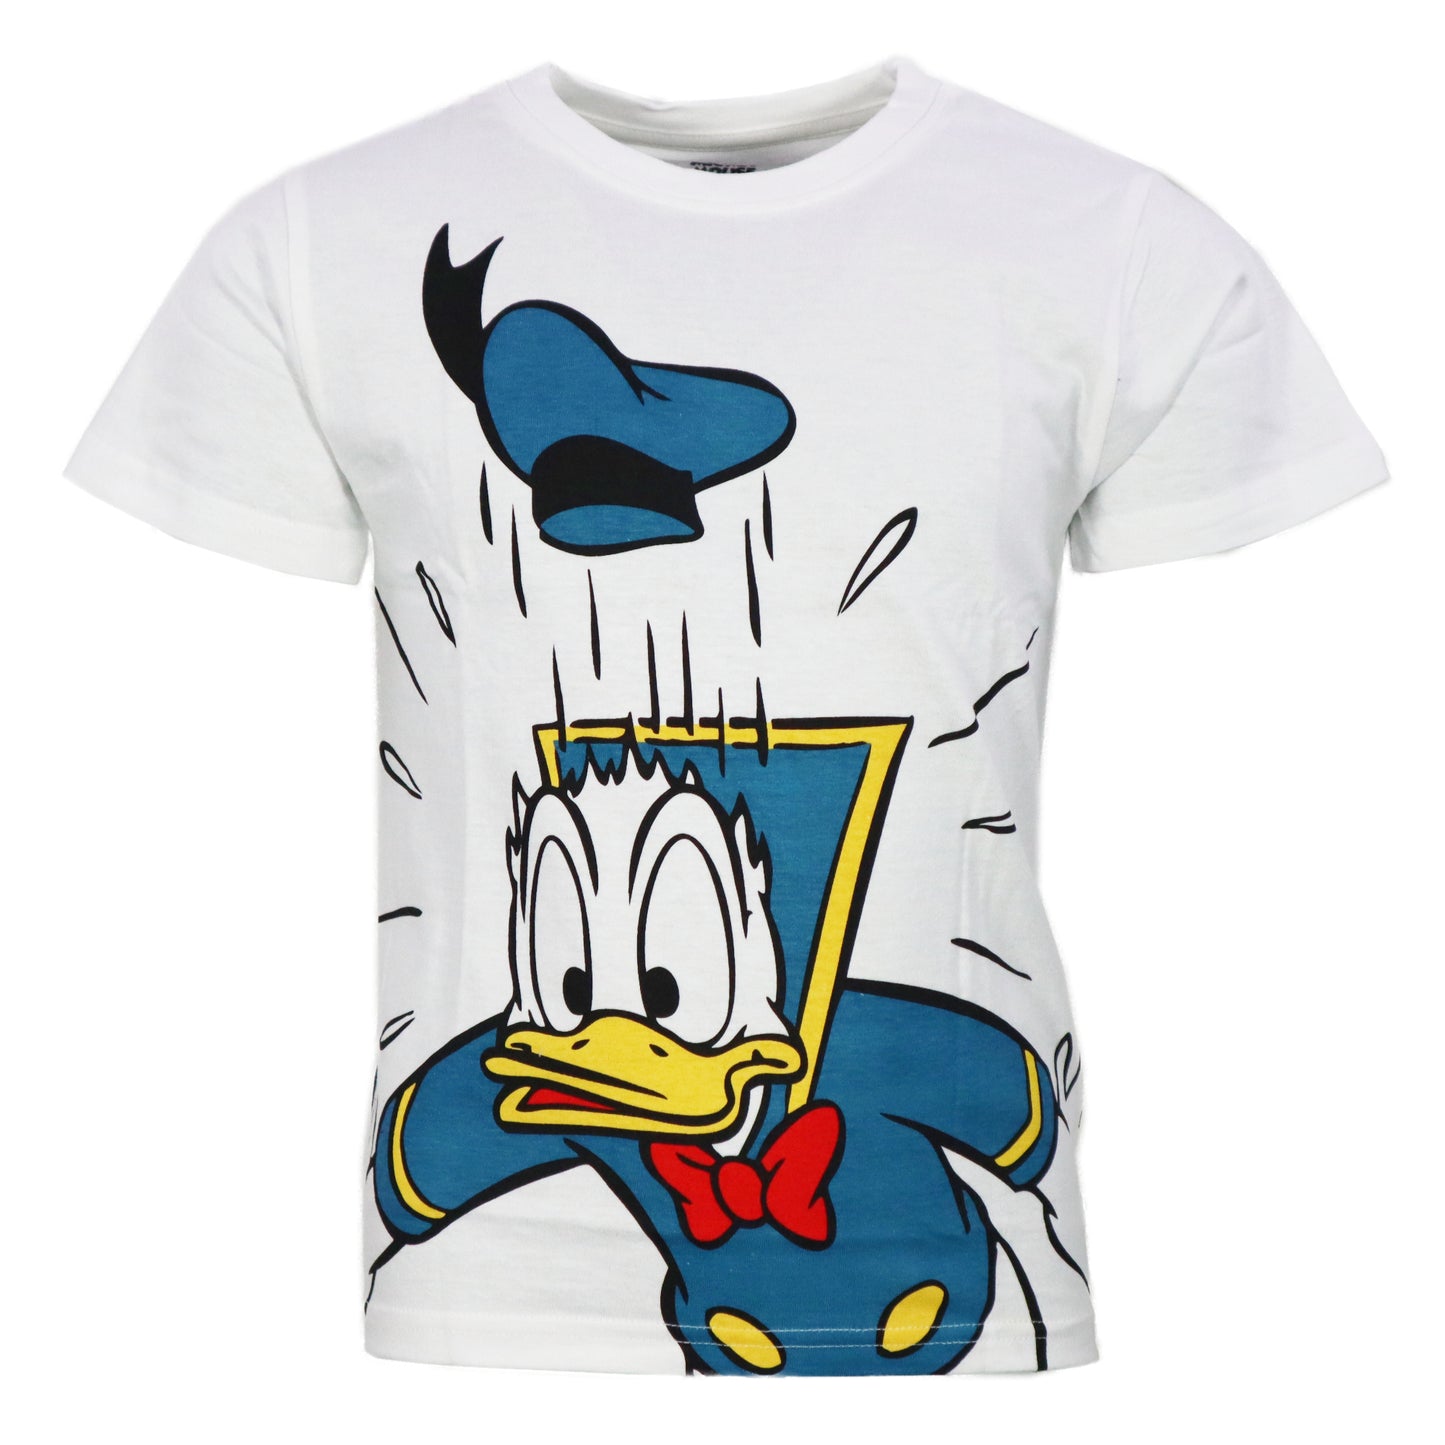 Disney Donald Duck Kinder Jungen Schlafanzug Pyjama